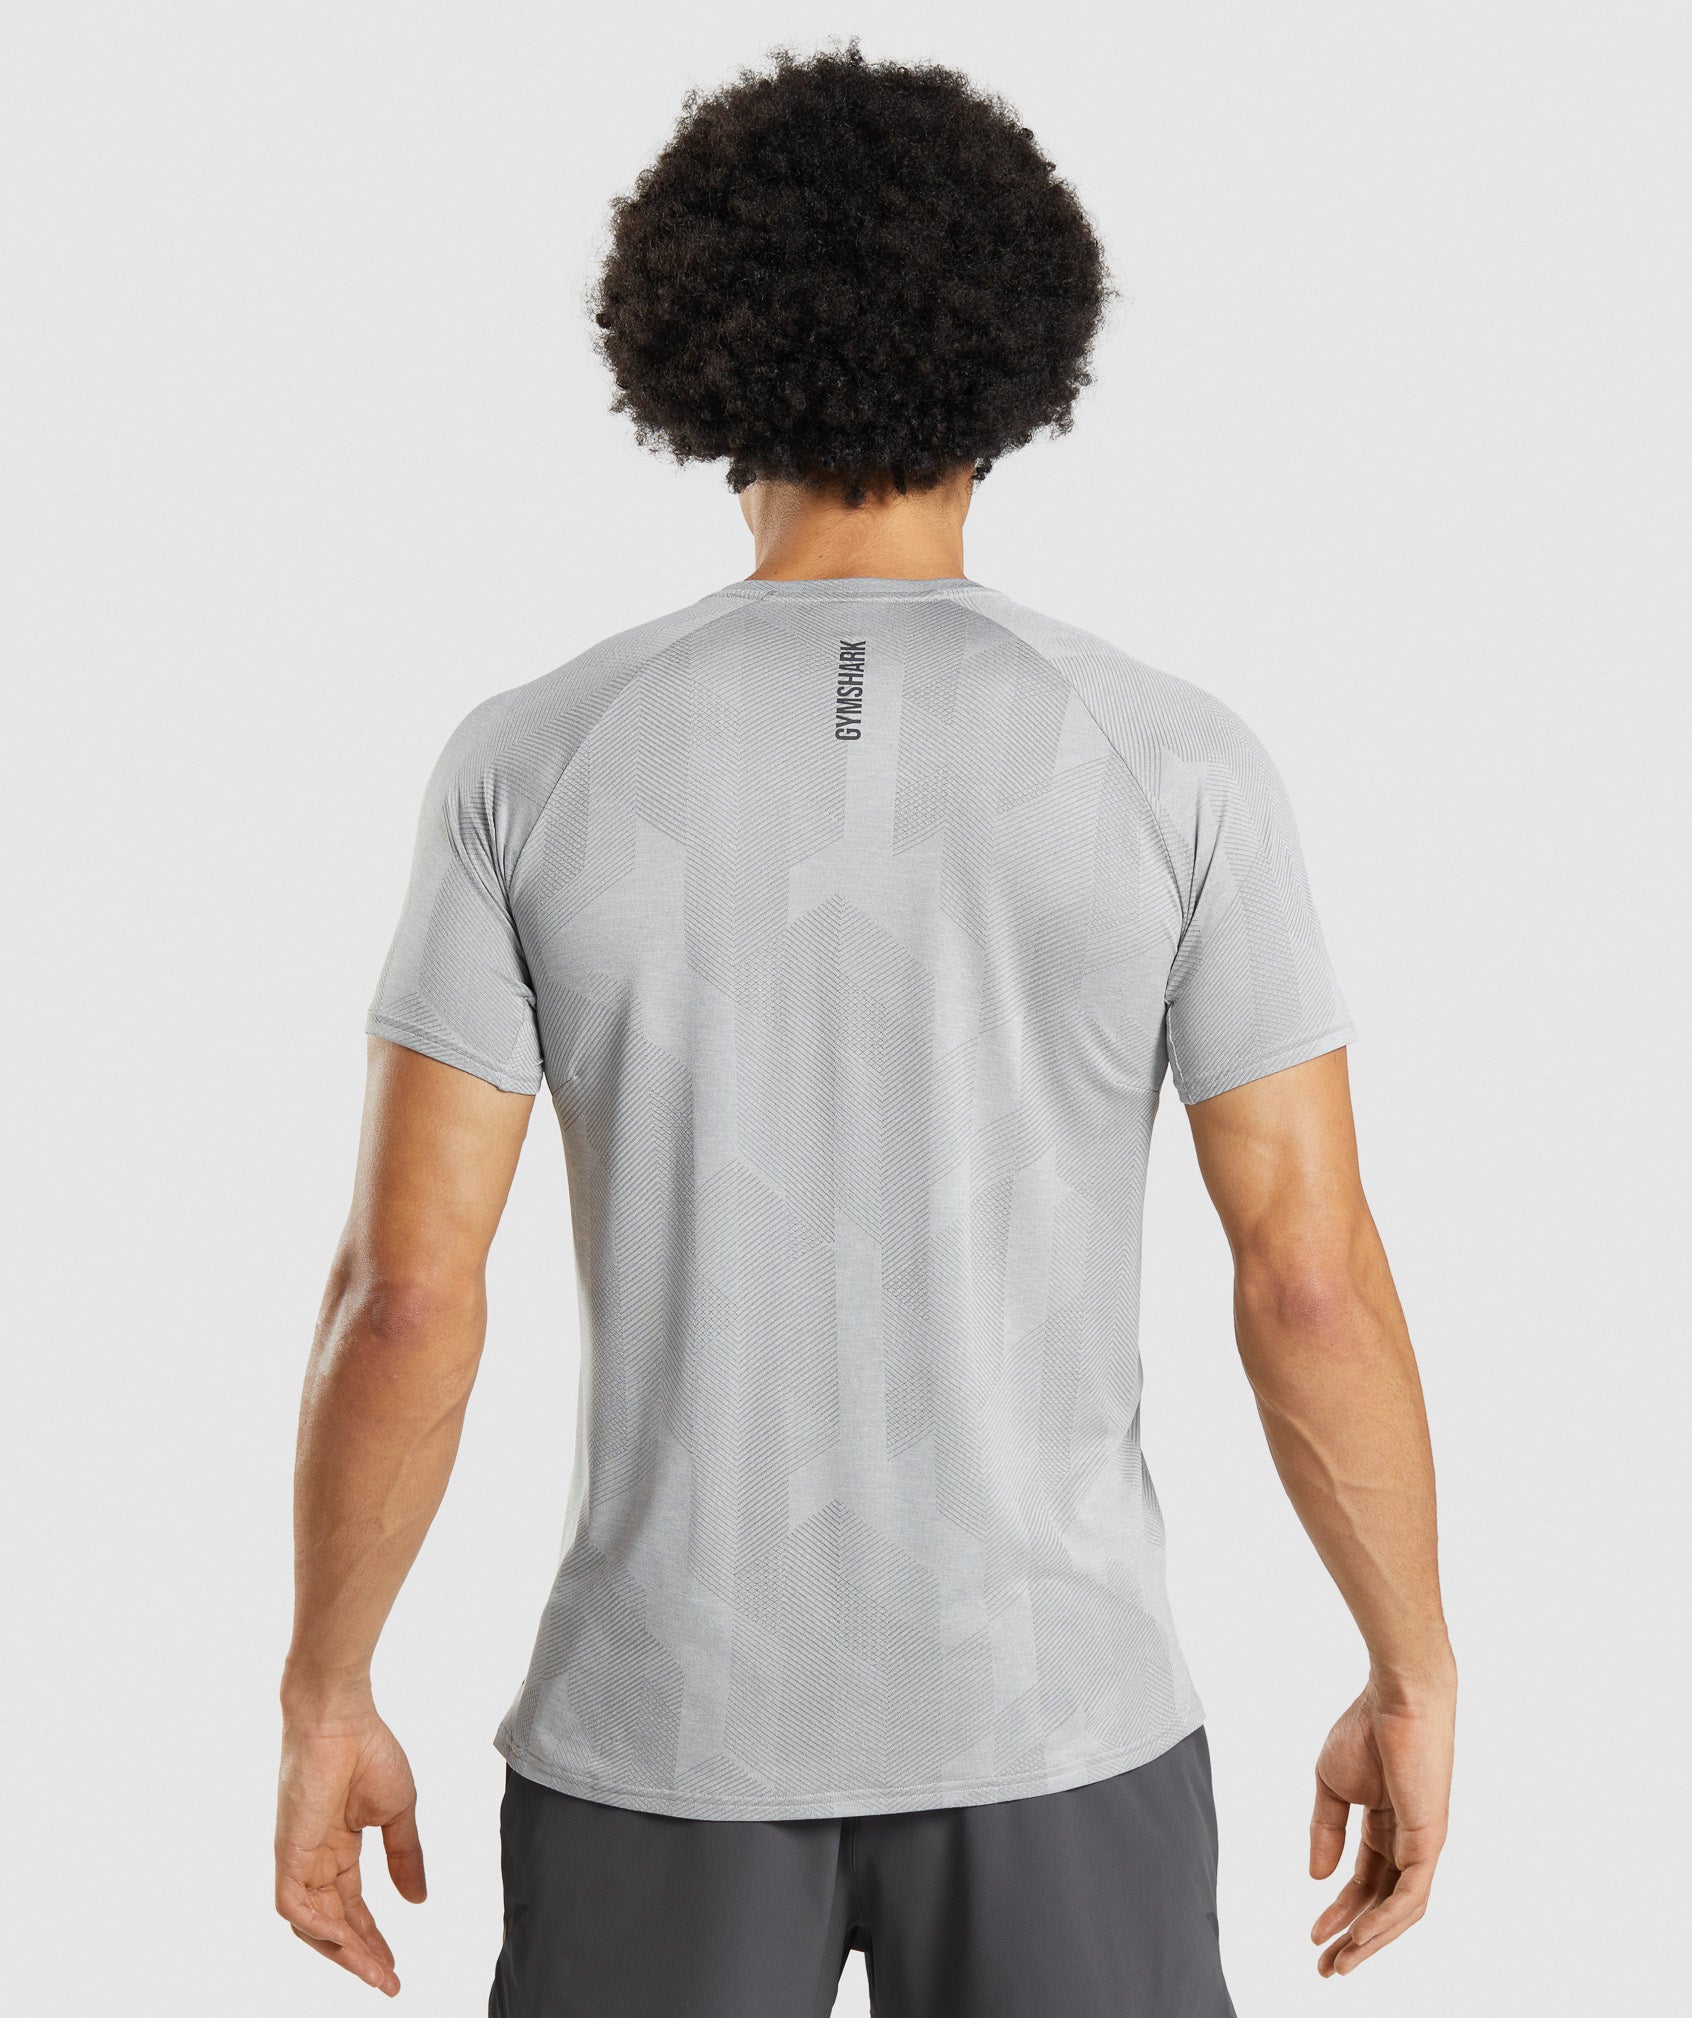 Apex T-Shirt in Smokey Grey/Light Grey